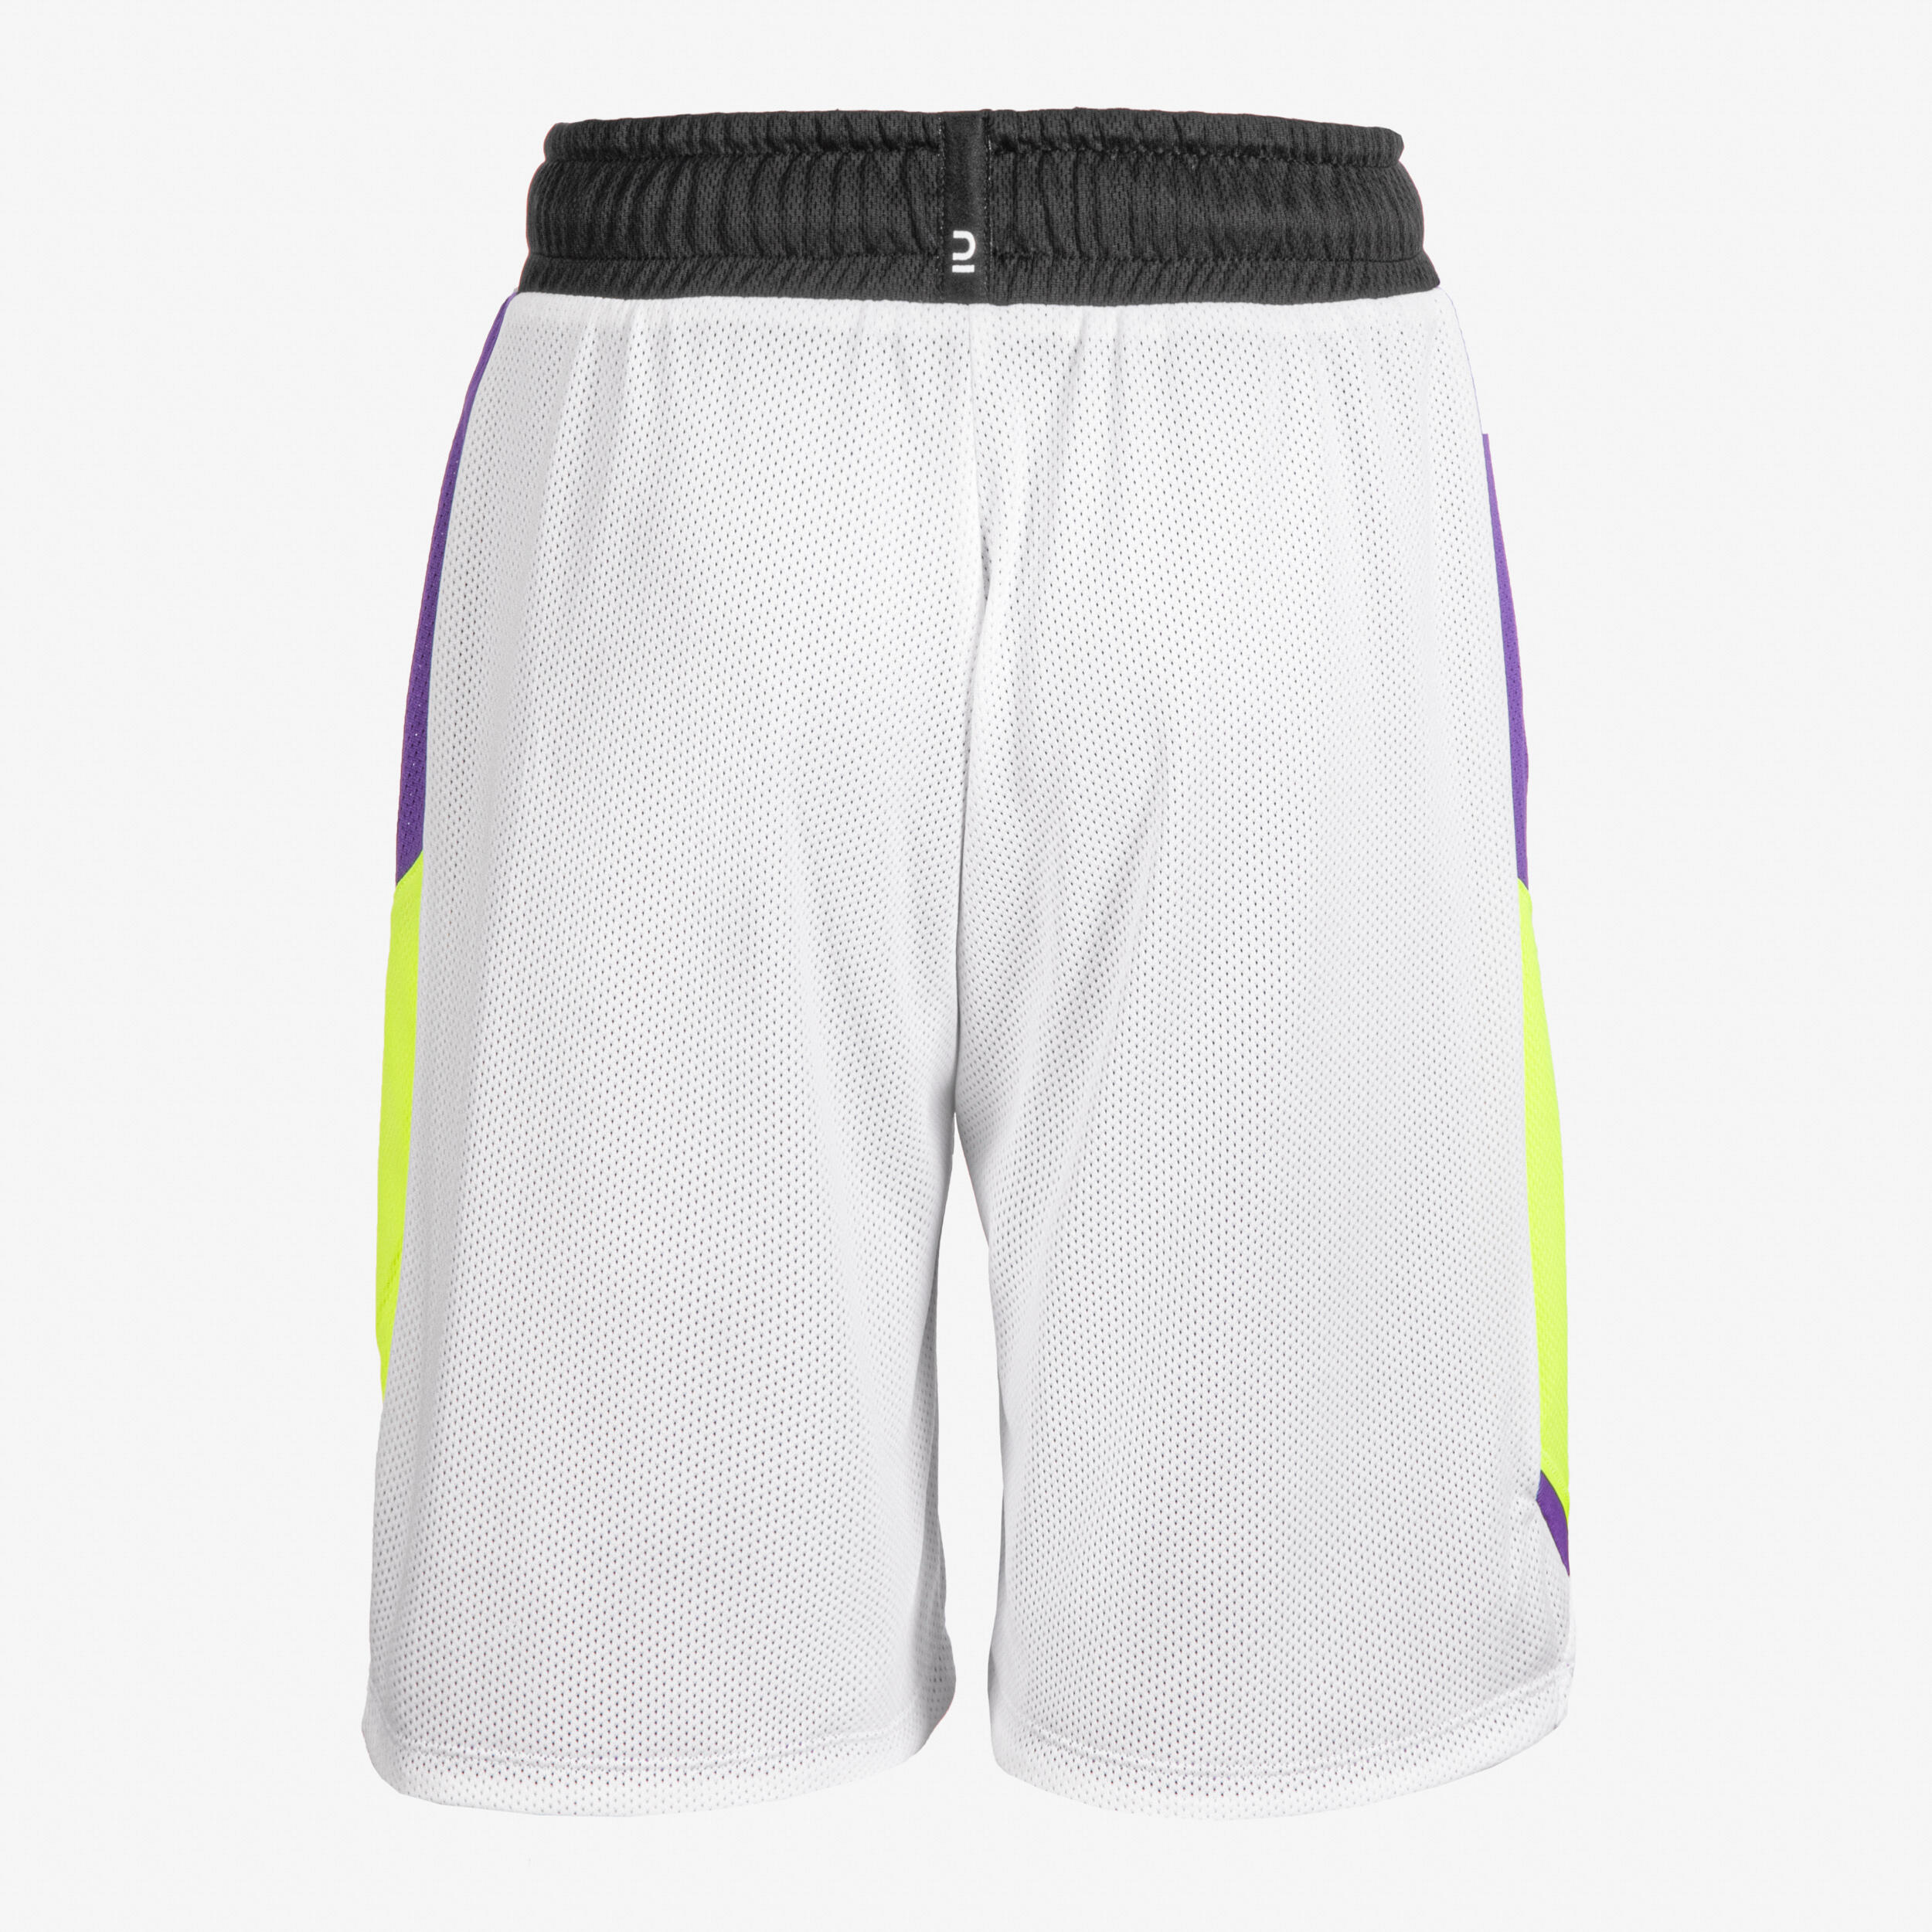 Kids' Reversible Basketball Shorts SH500R - White/Purple 10/11